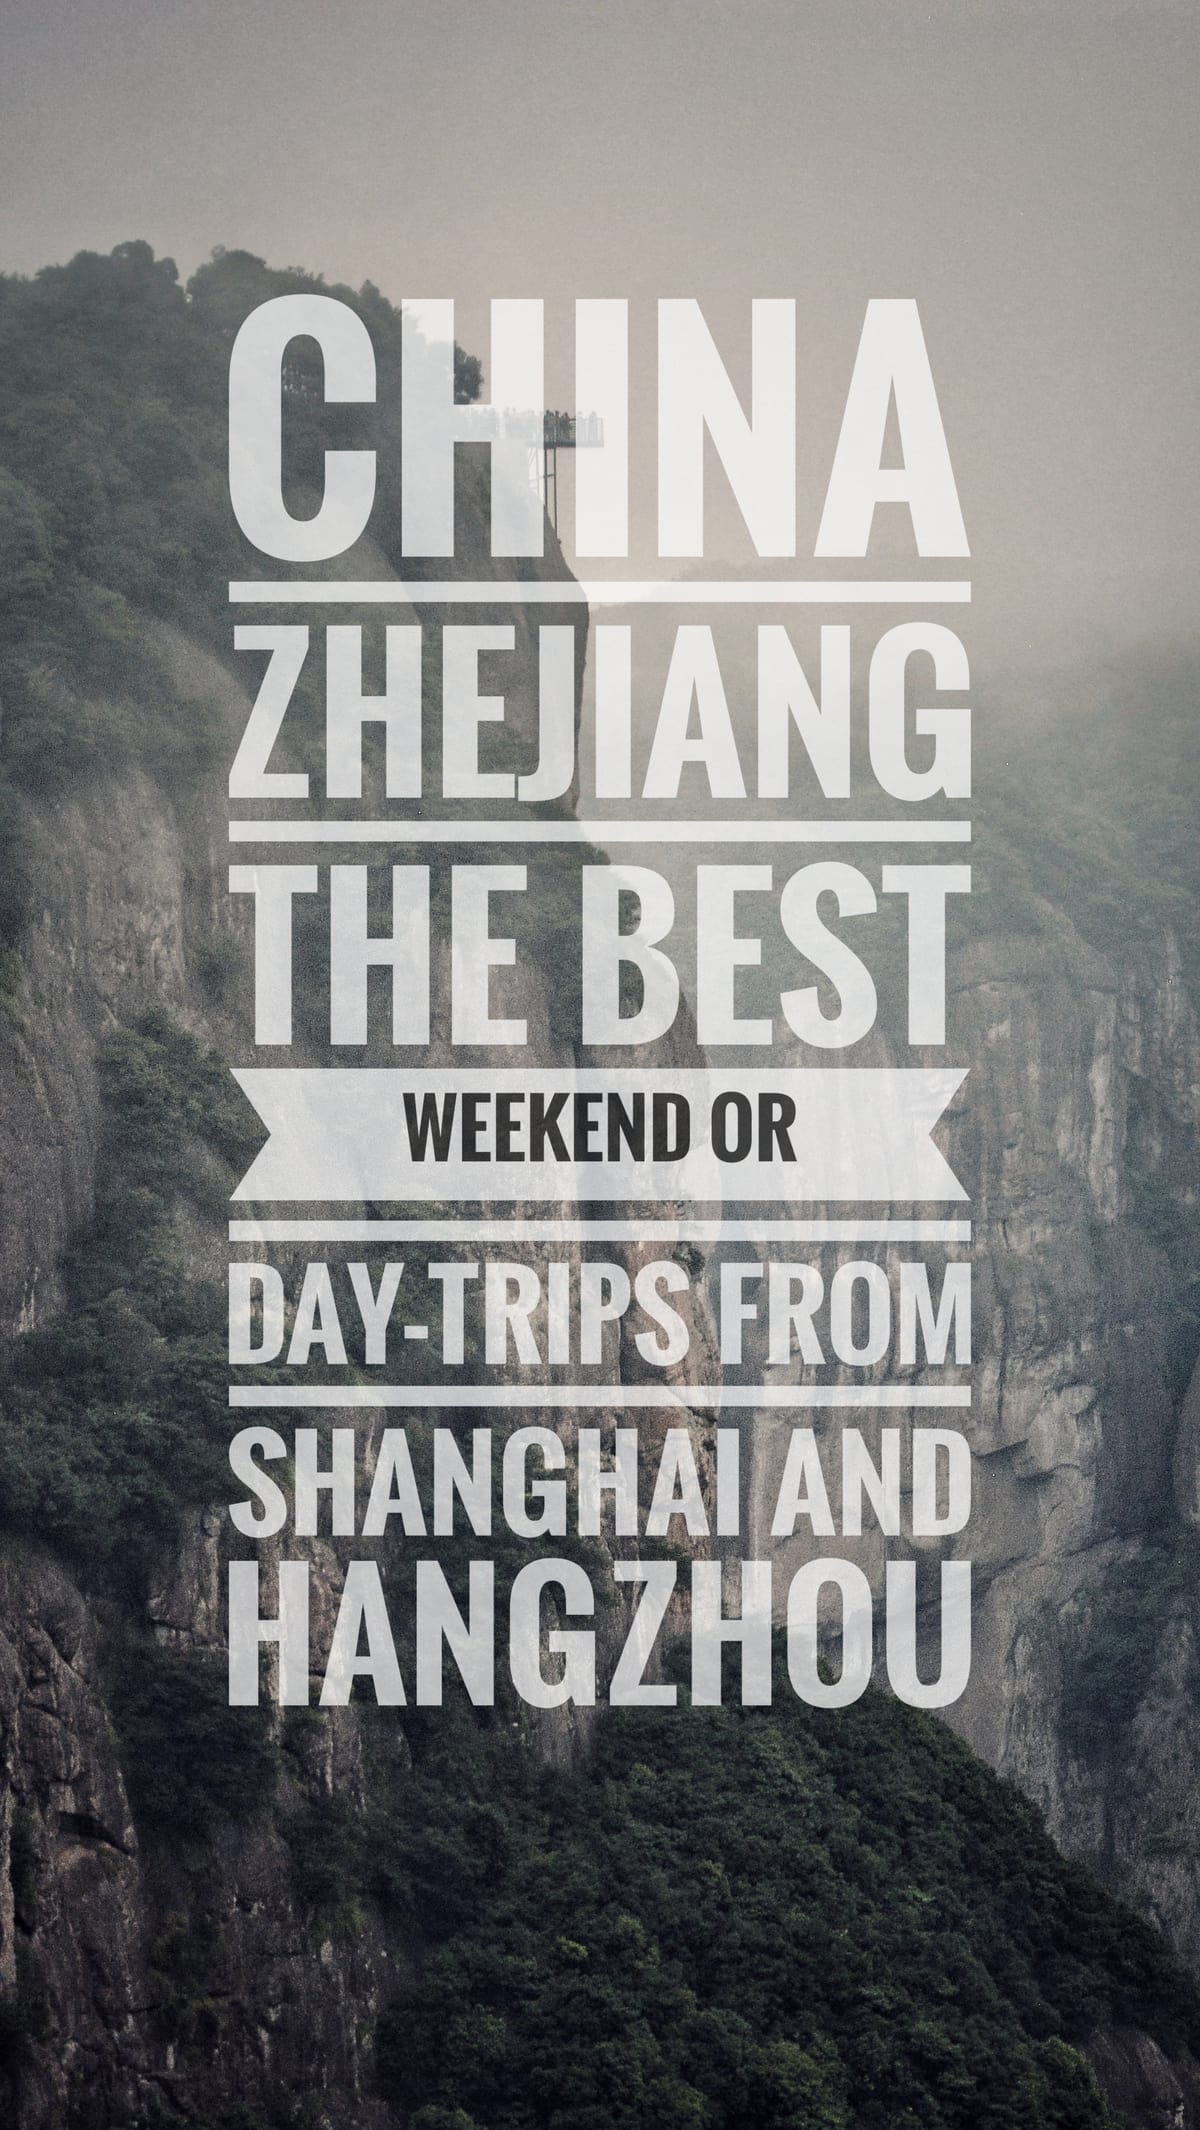 best weekend day trip shanghai hangzhou